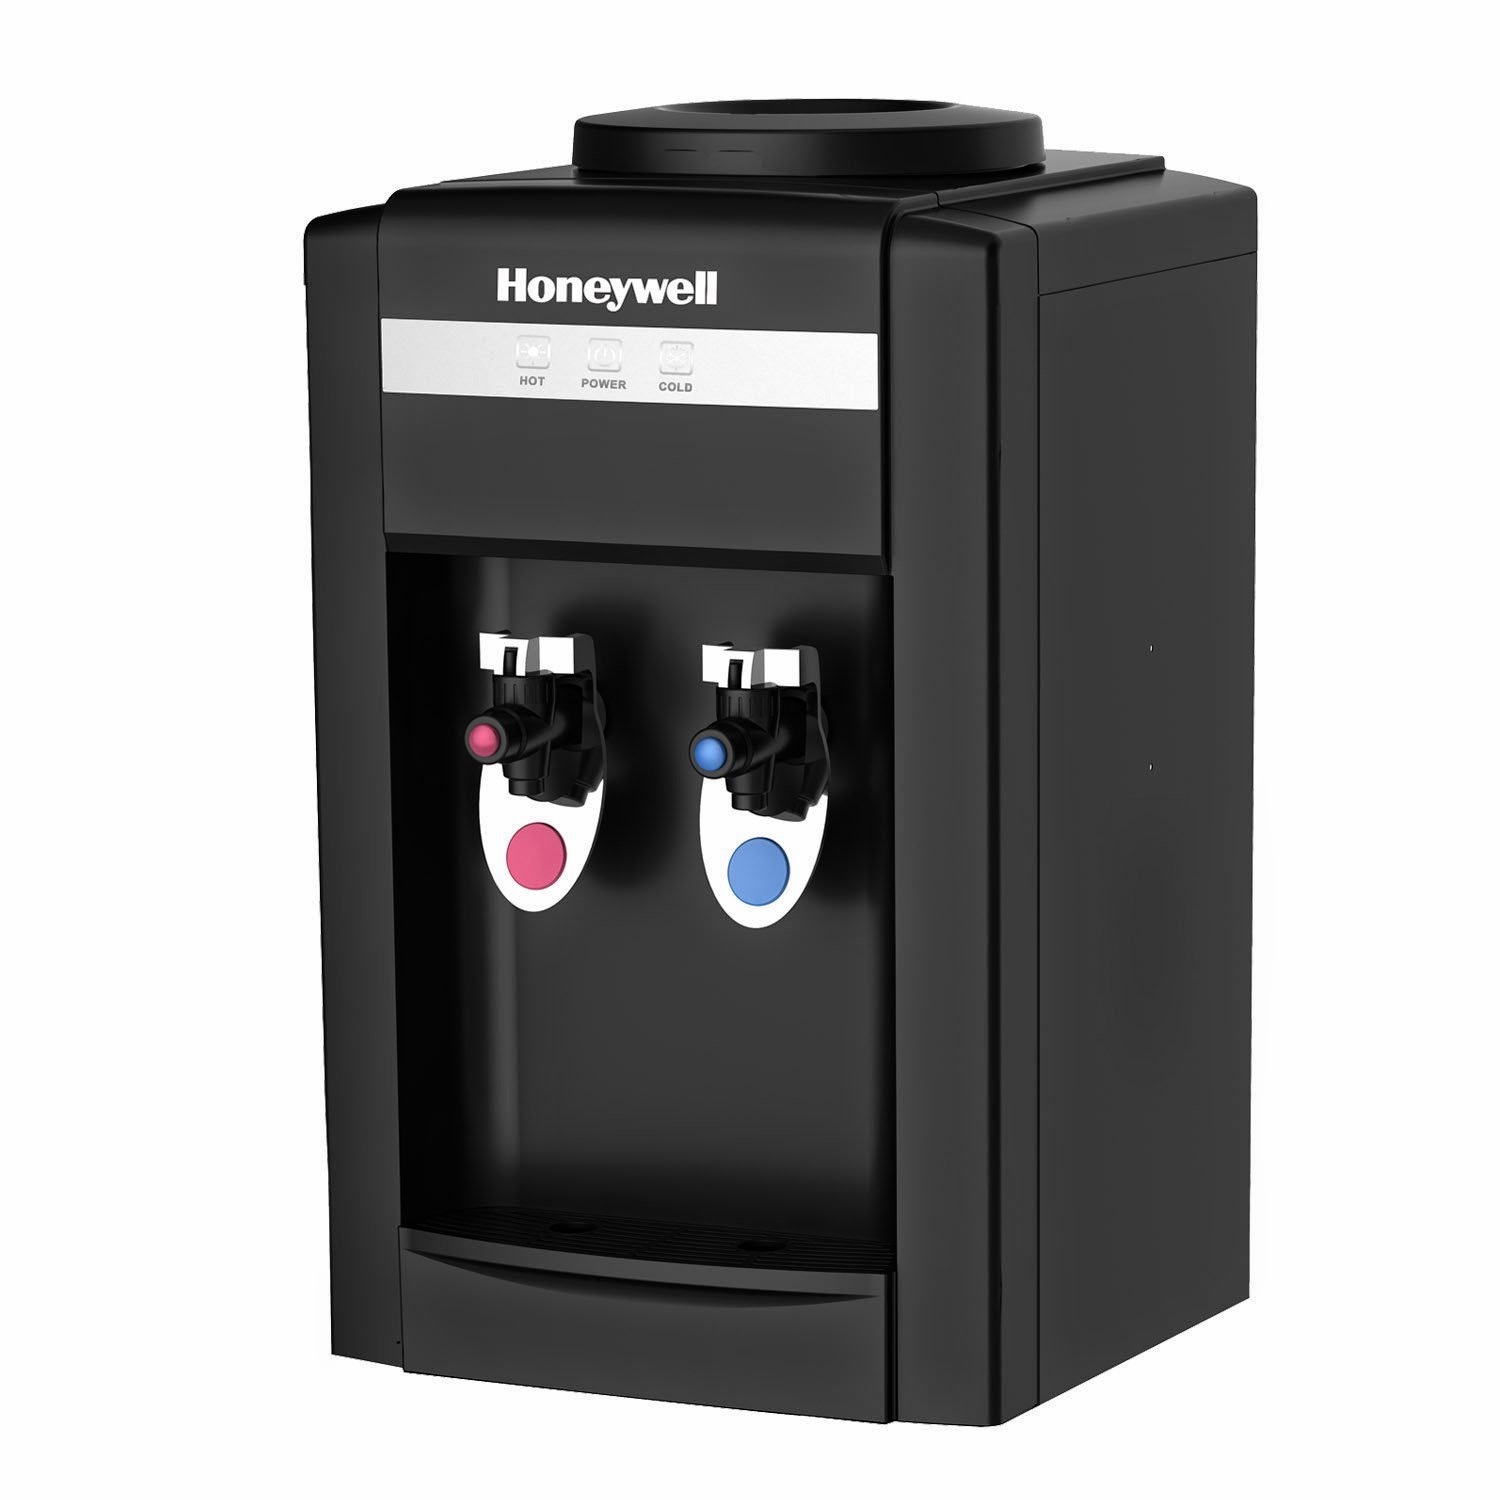 water dispenser: countertop water dispenser